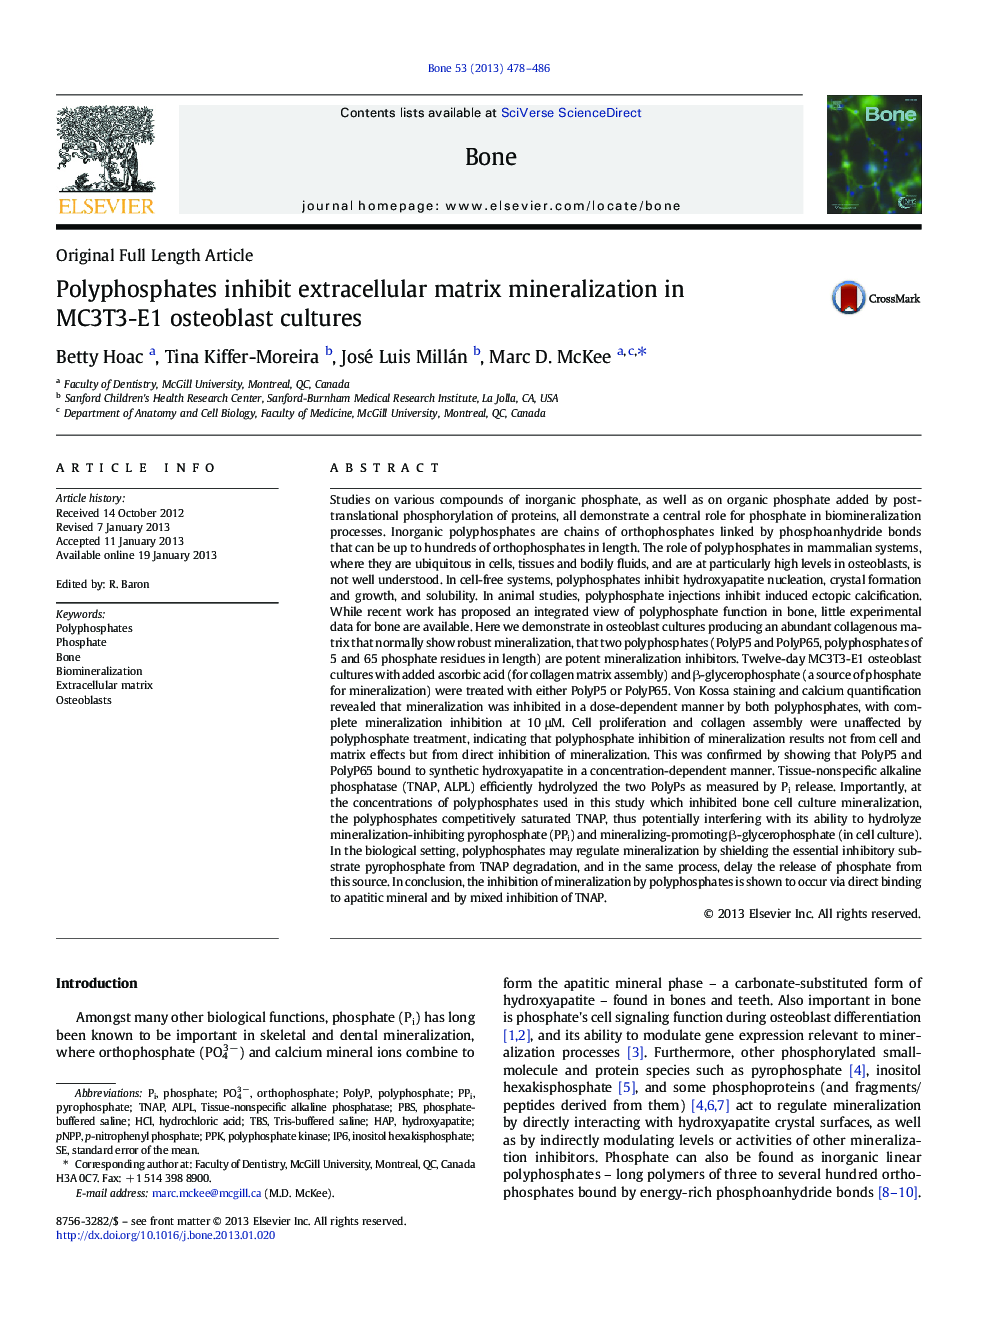 Polyphosphates inhibit extracellular matrix mineralization in MC3T3-E1 osteoblast cultures